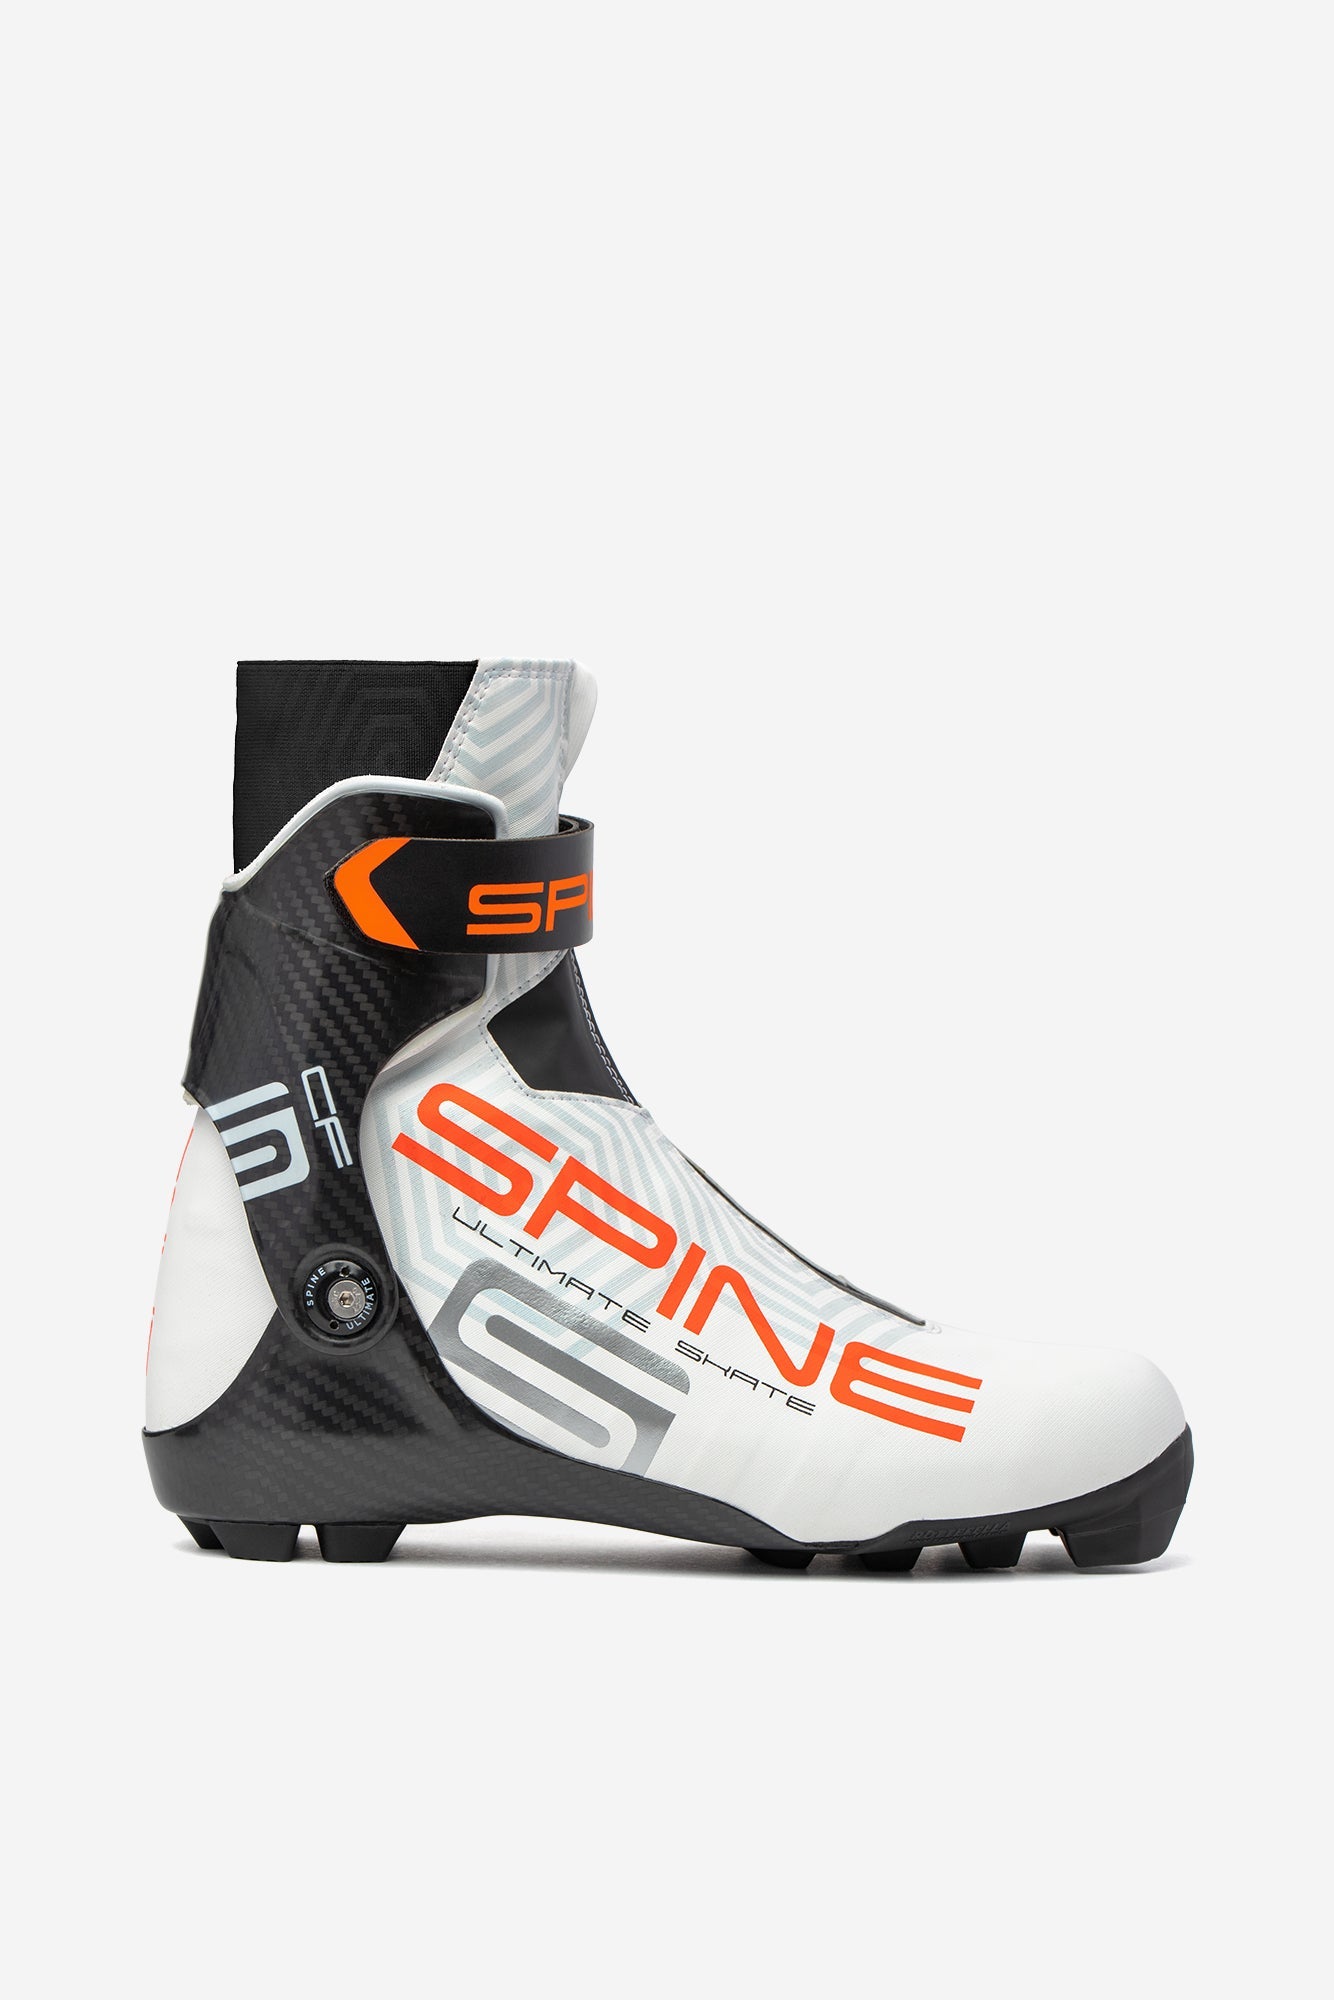 Ultimate Skate 599 (Xcelerator SSR) Nordic Ski Boots Angle 1